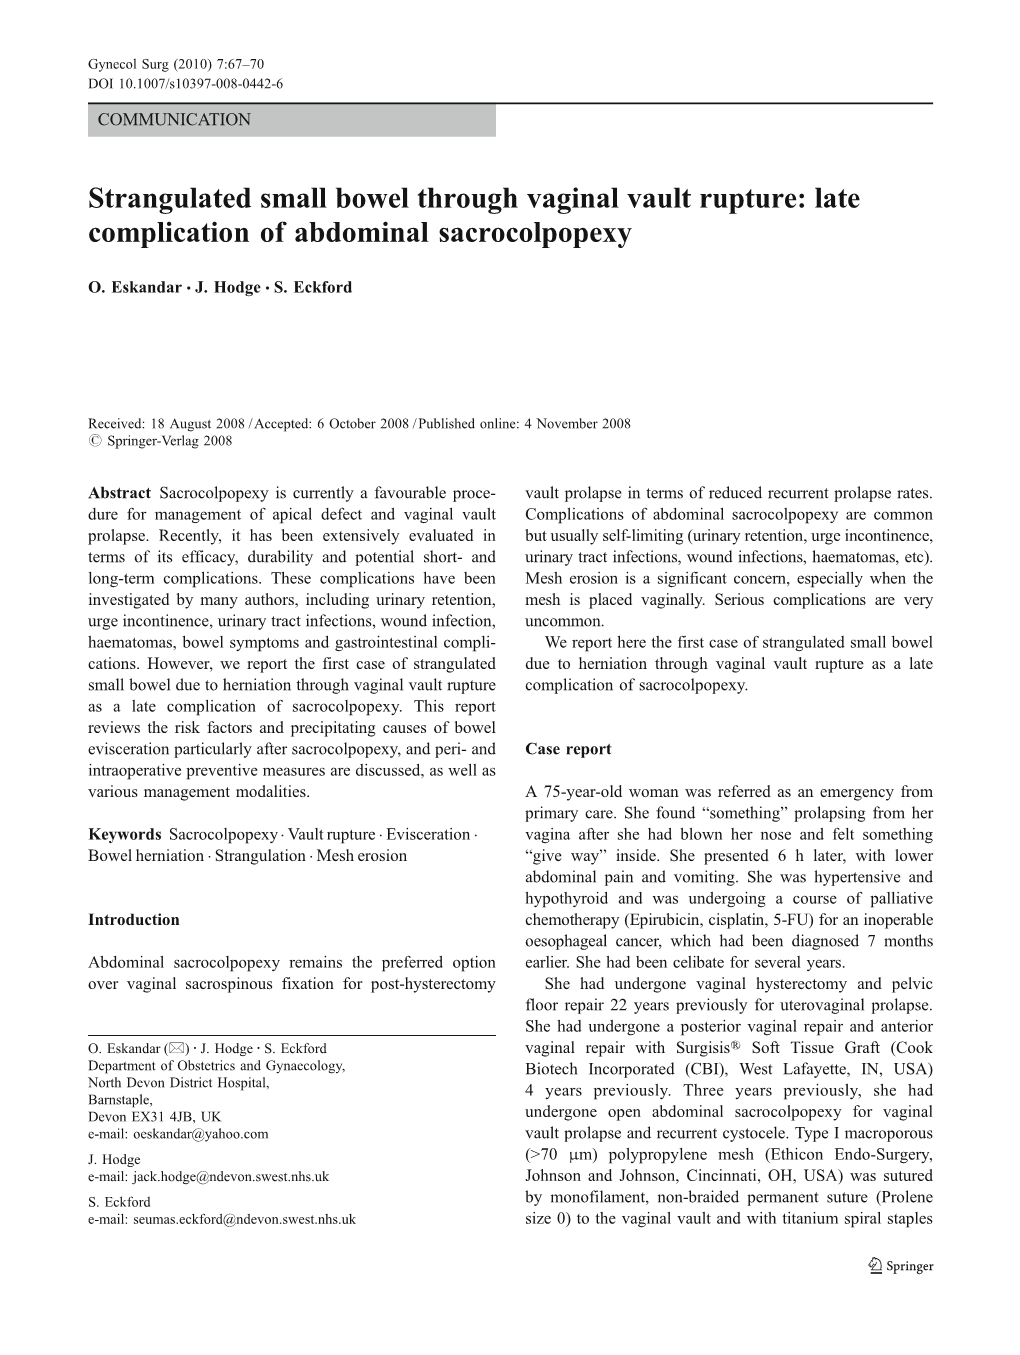 Strangulated Small Bowel Through Vaginal Vault Rupture: Late Complication of Abdominal Sacrocolpopexy